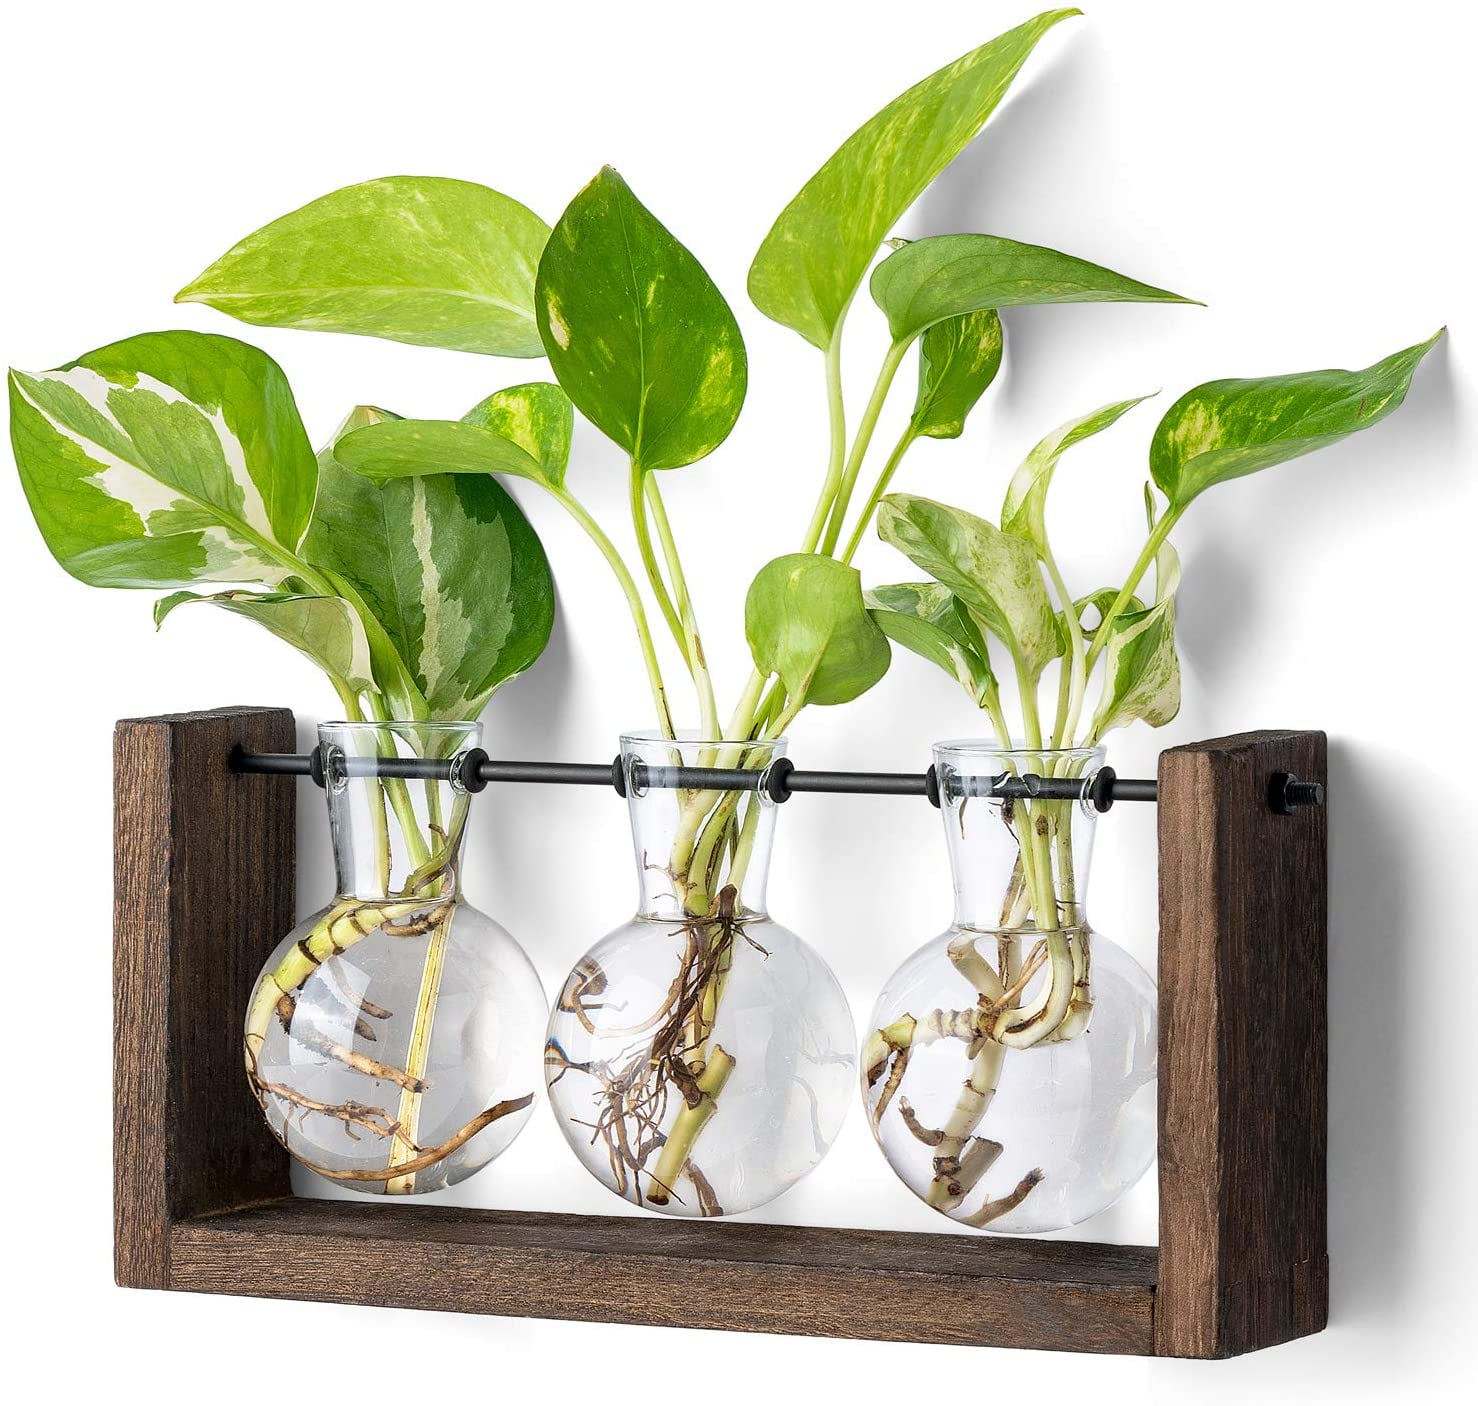 Retro Style Plant Propagation In Kitchen Herb Garden Hydroponic Vase 